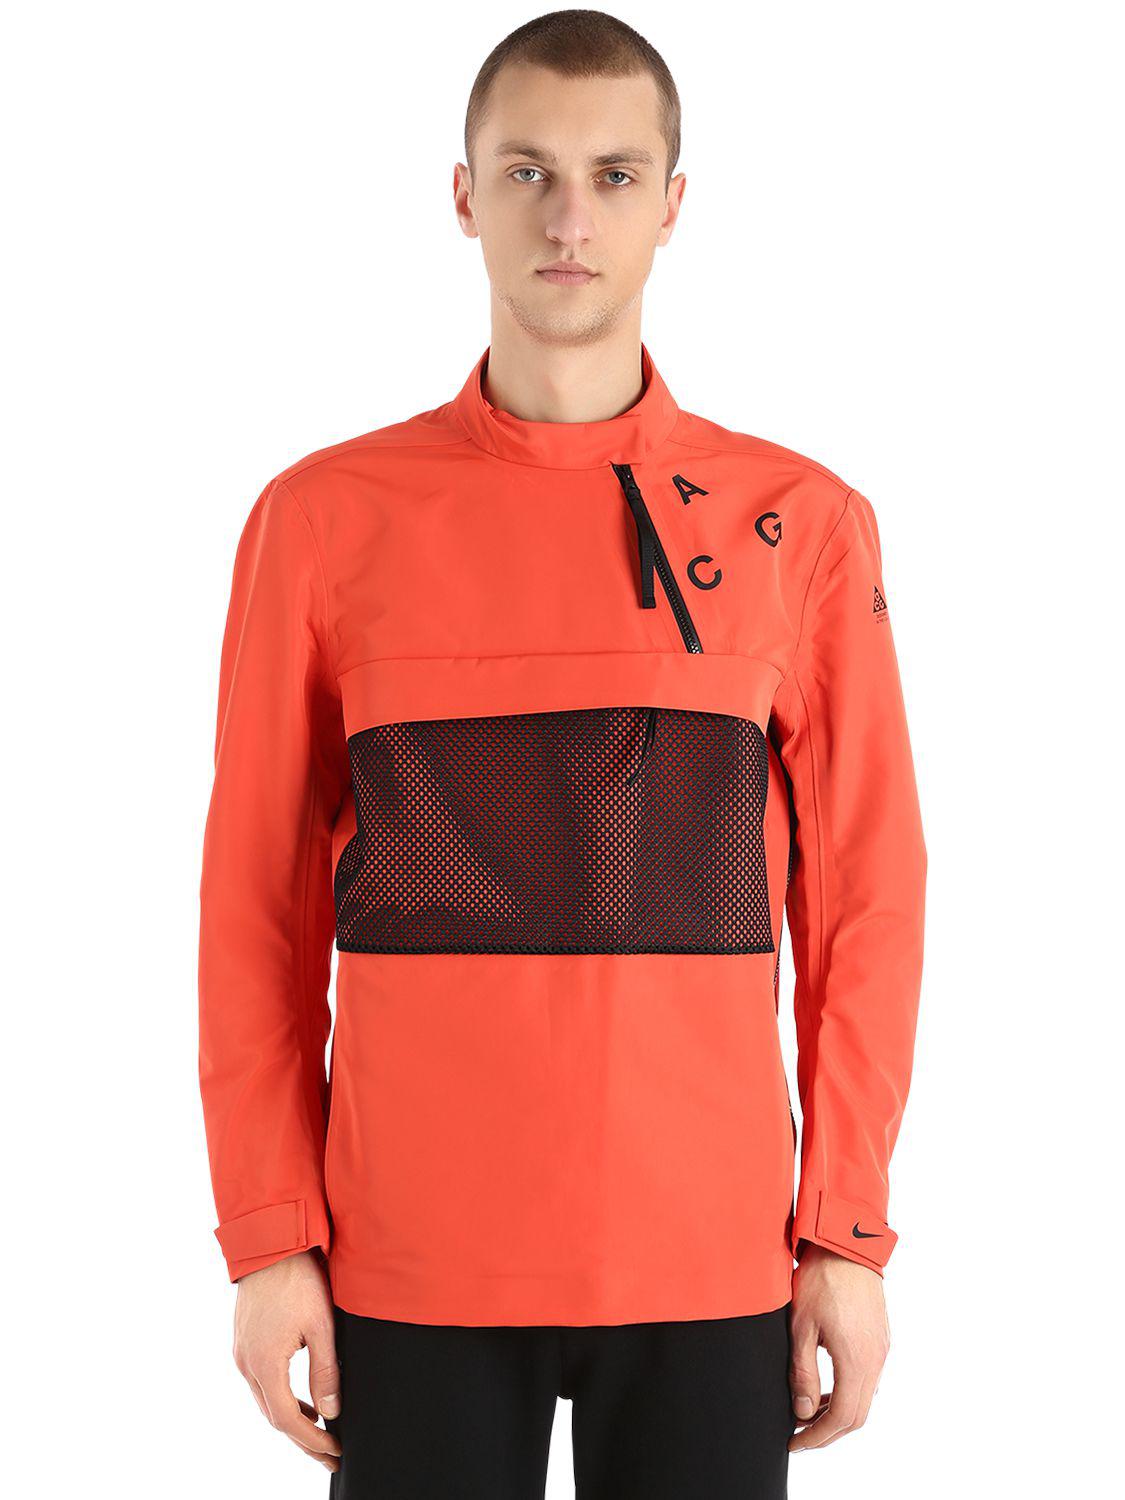 Nike Nikelab Acg Pullover Shell Jacket in Orange for Men - Lyst